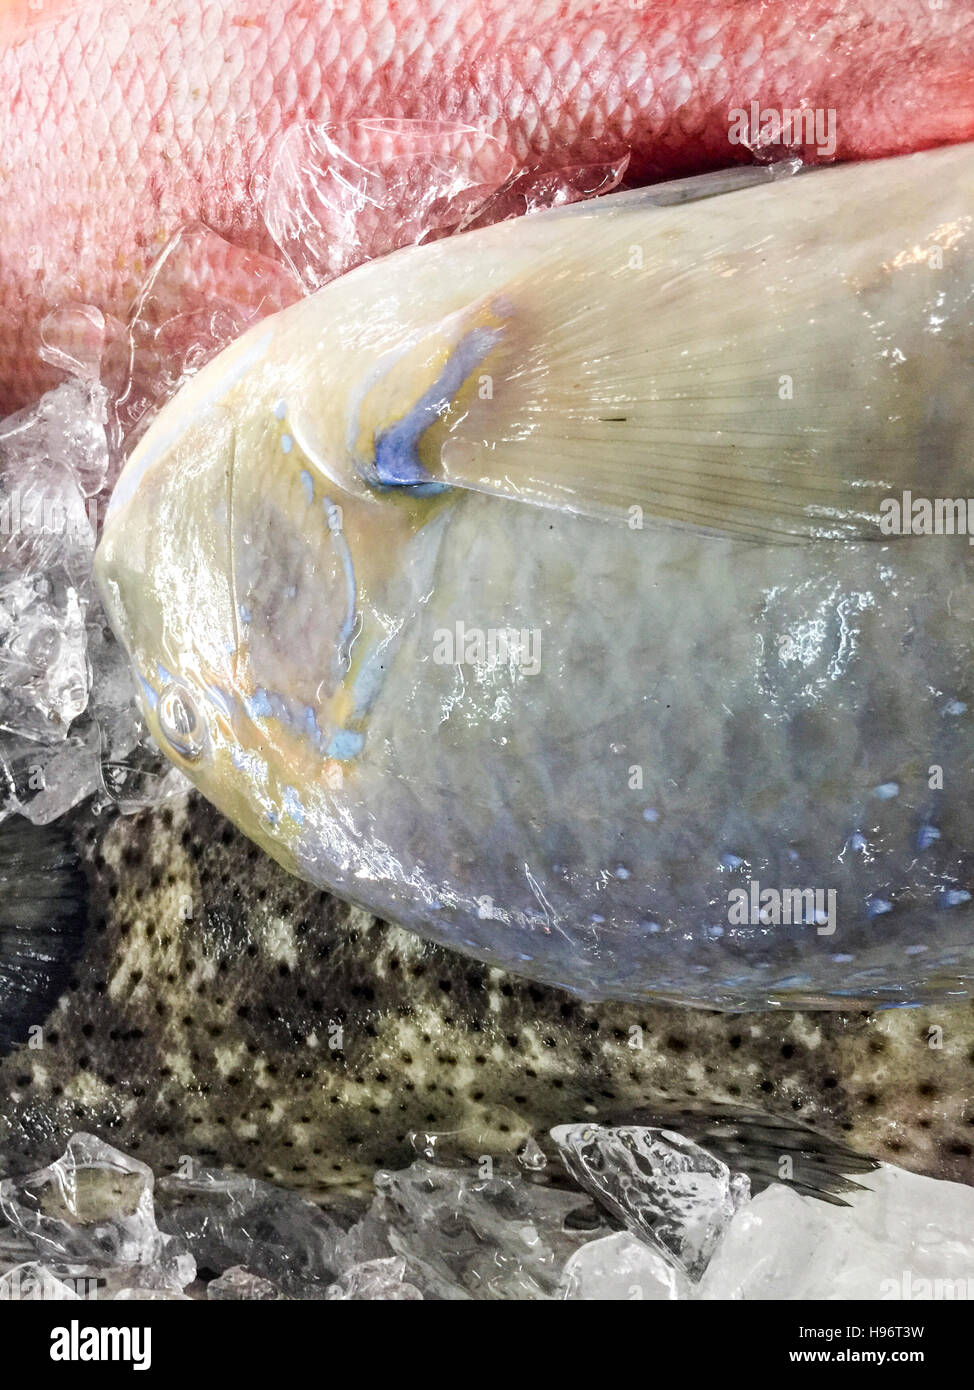 Close up of fresh fish Scarus rubroviolaceus or local called Bayan or Ketarap on display at fish market. Stock Photo